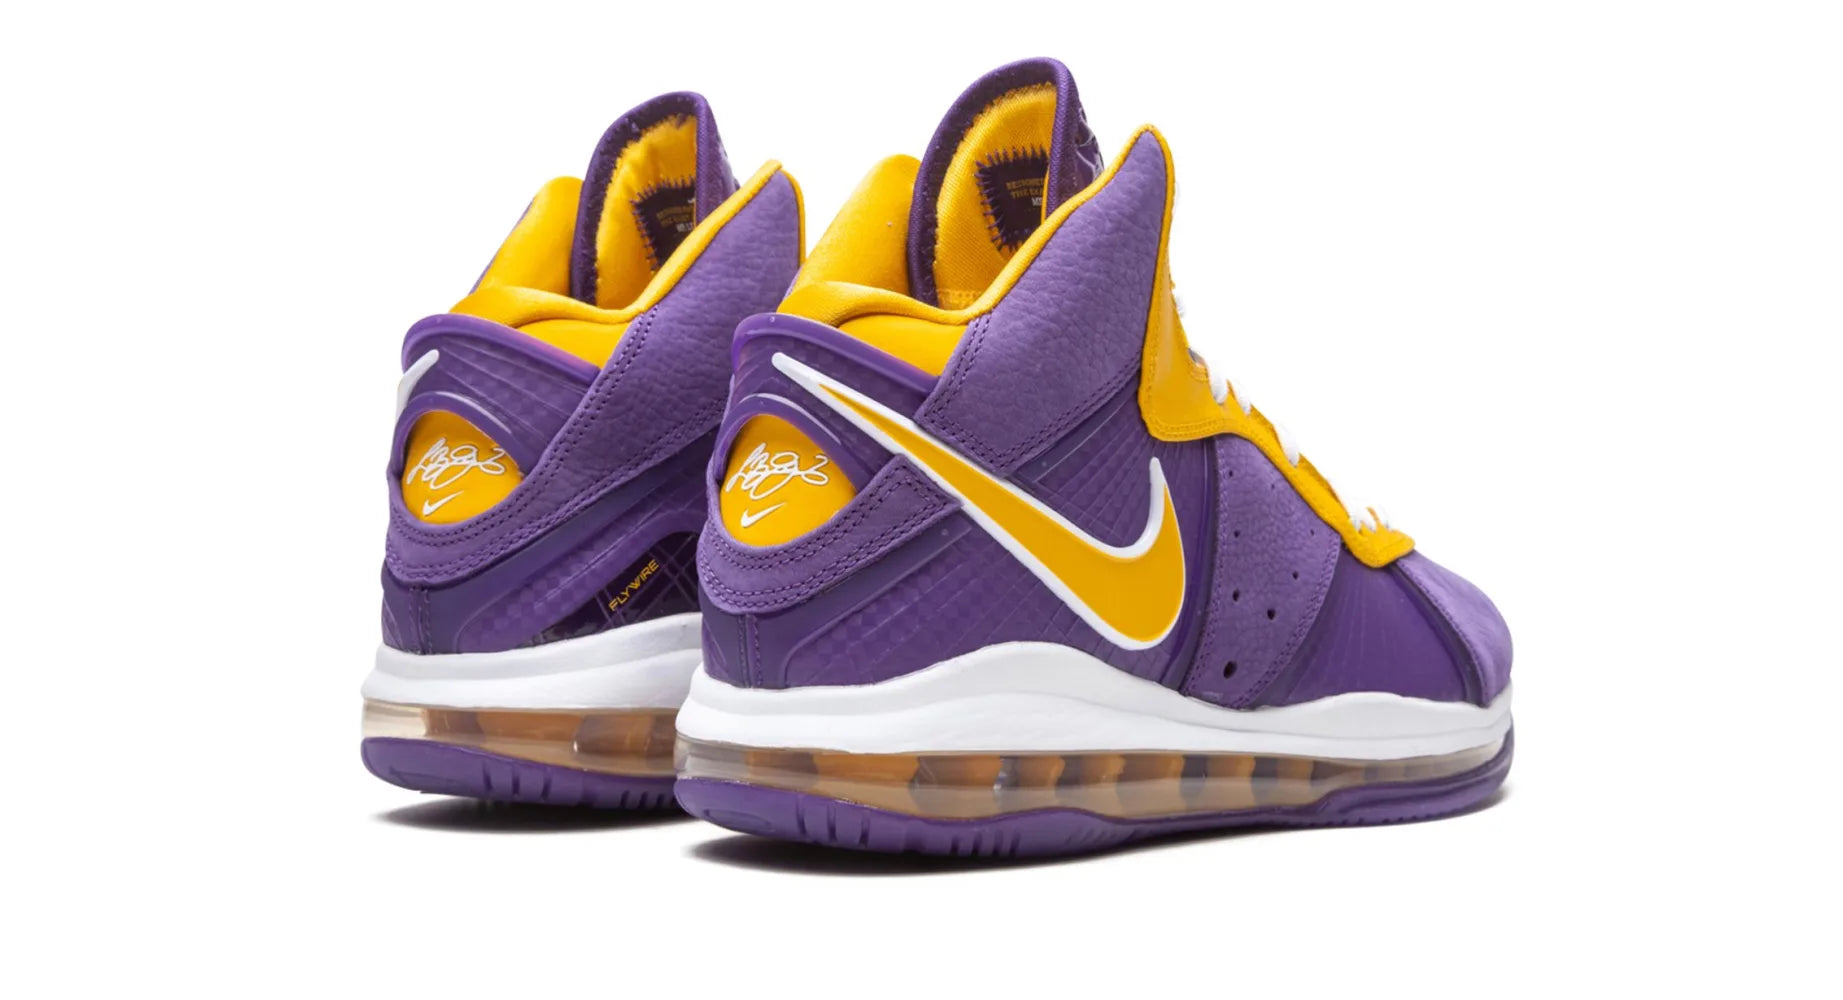 Nike LeBron 8 Lakers